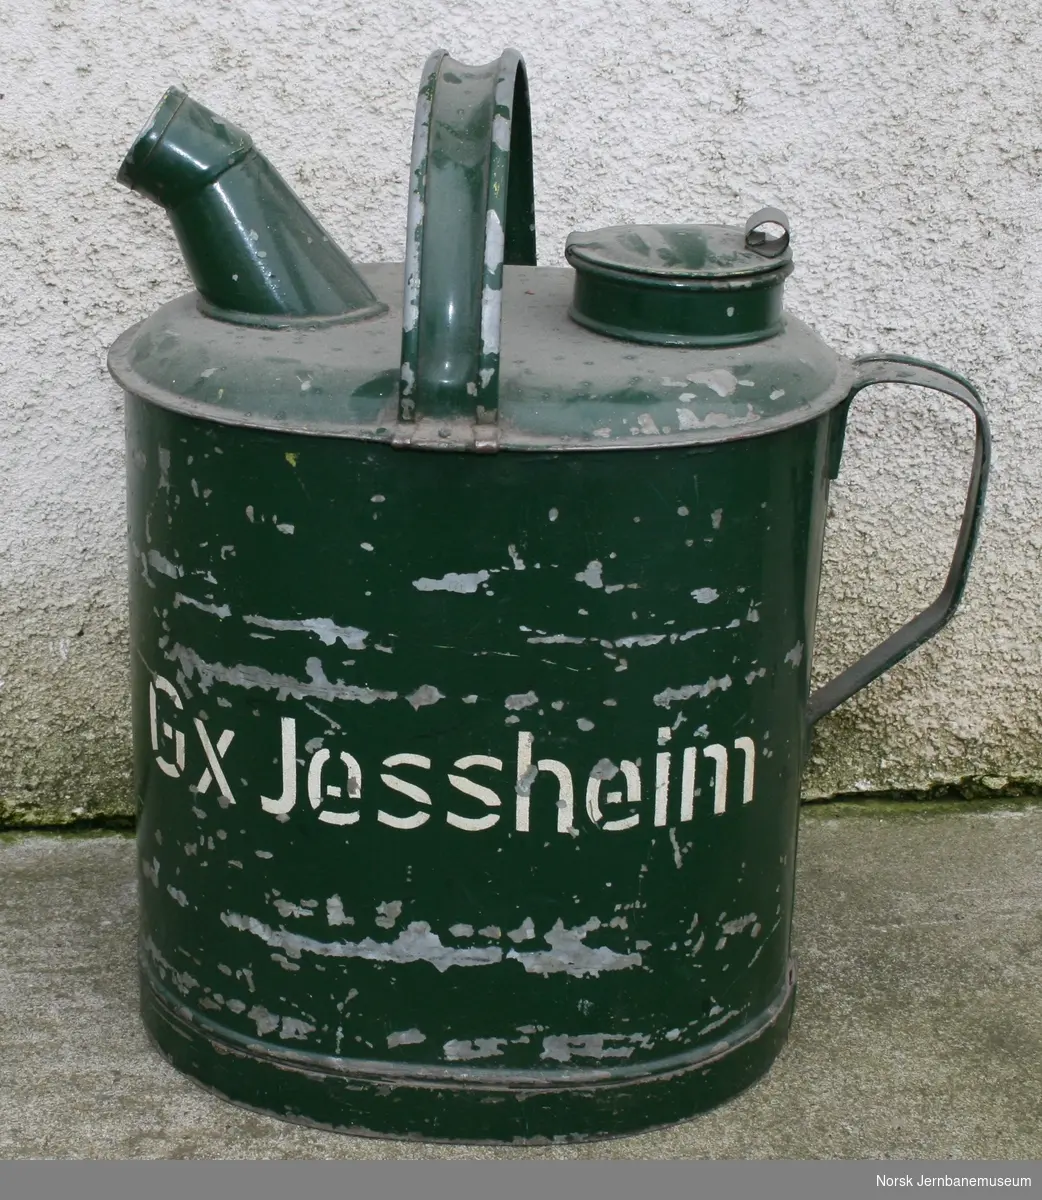 Oljekanne merket "NSB Oslo Distrikt" og "Gx Jessheim"